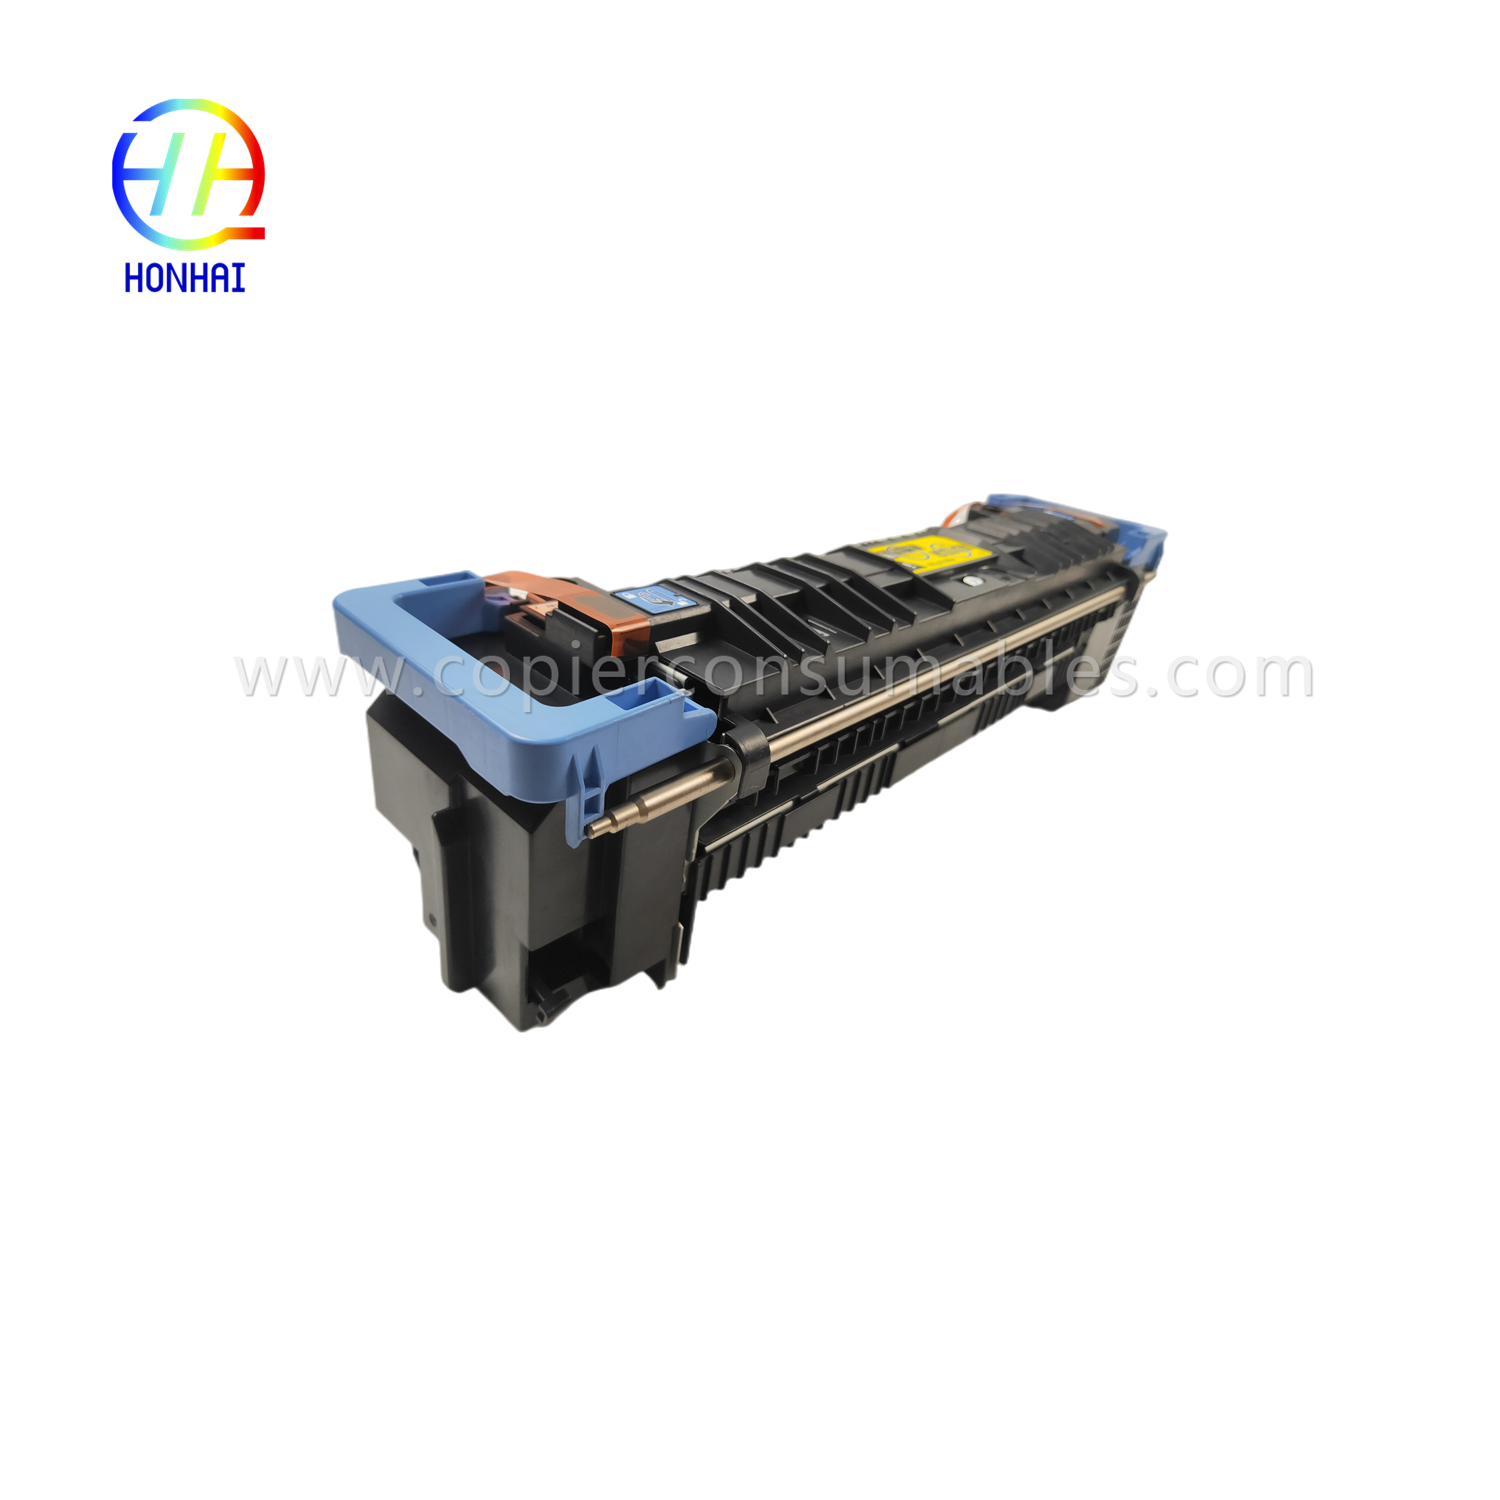 https://c585.goodao.net/fuser-assembly-unit-for-hp-m855-m880-m855dn-m855xh-m880z-m880z-c1n54-67901-c1n58-67901-fusing-heating-pro/x